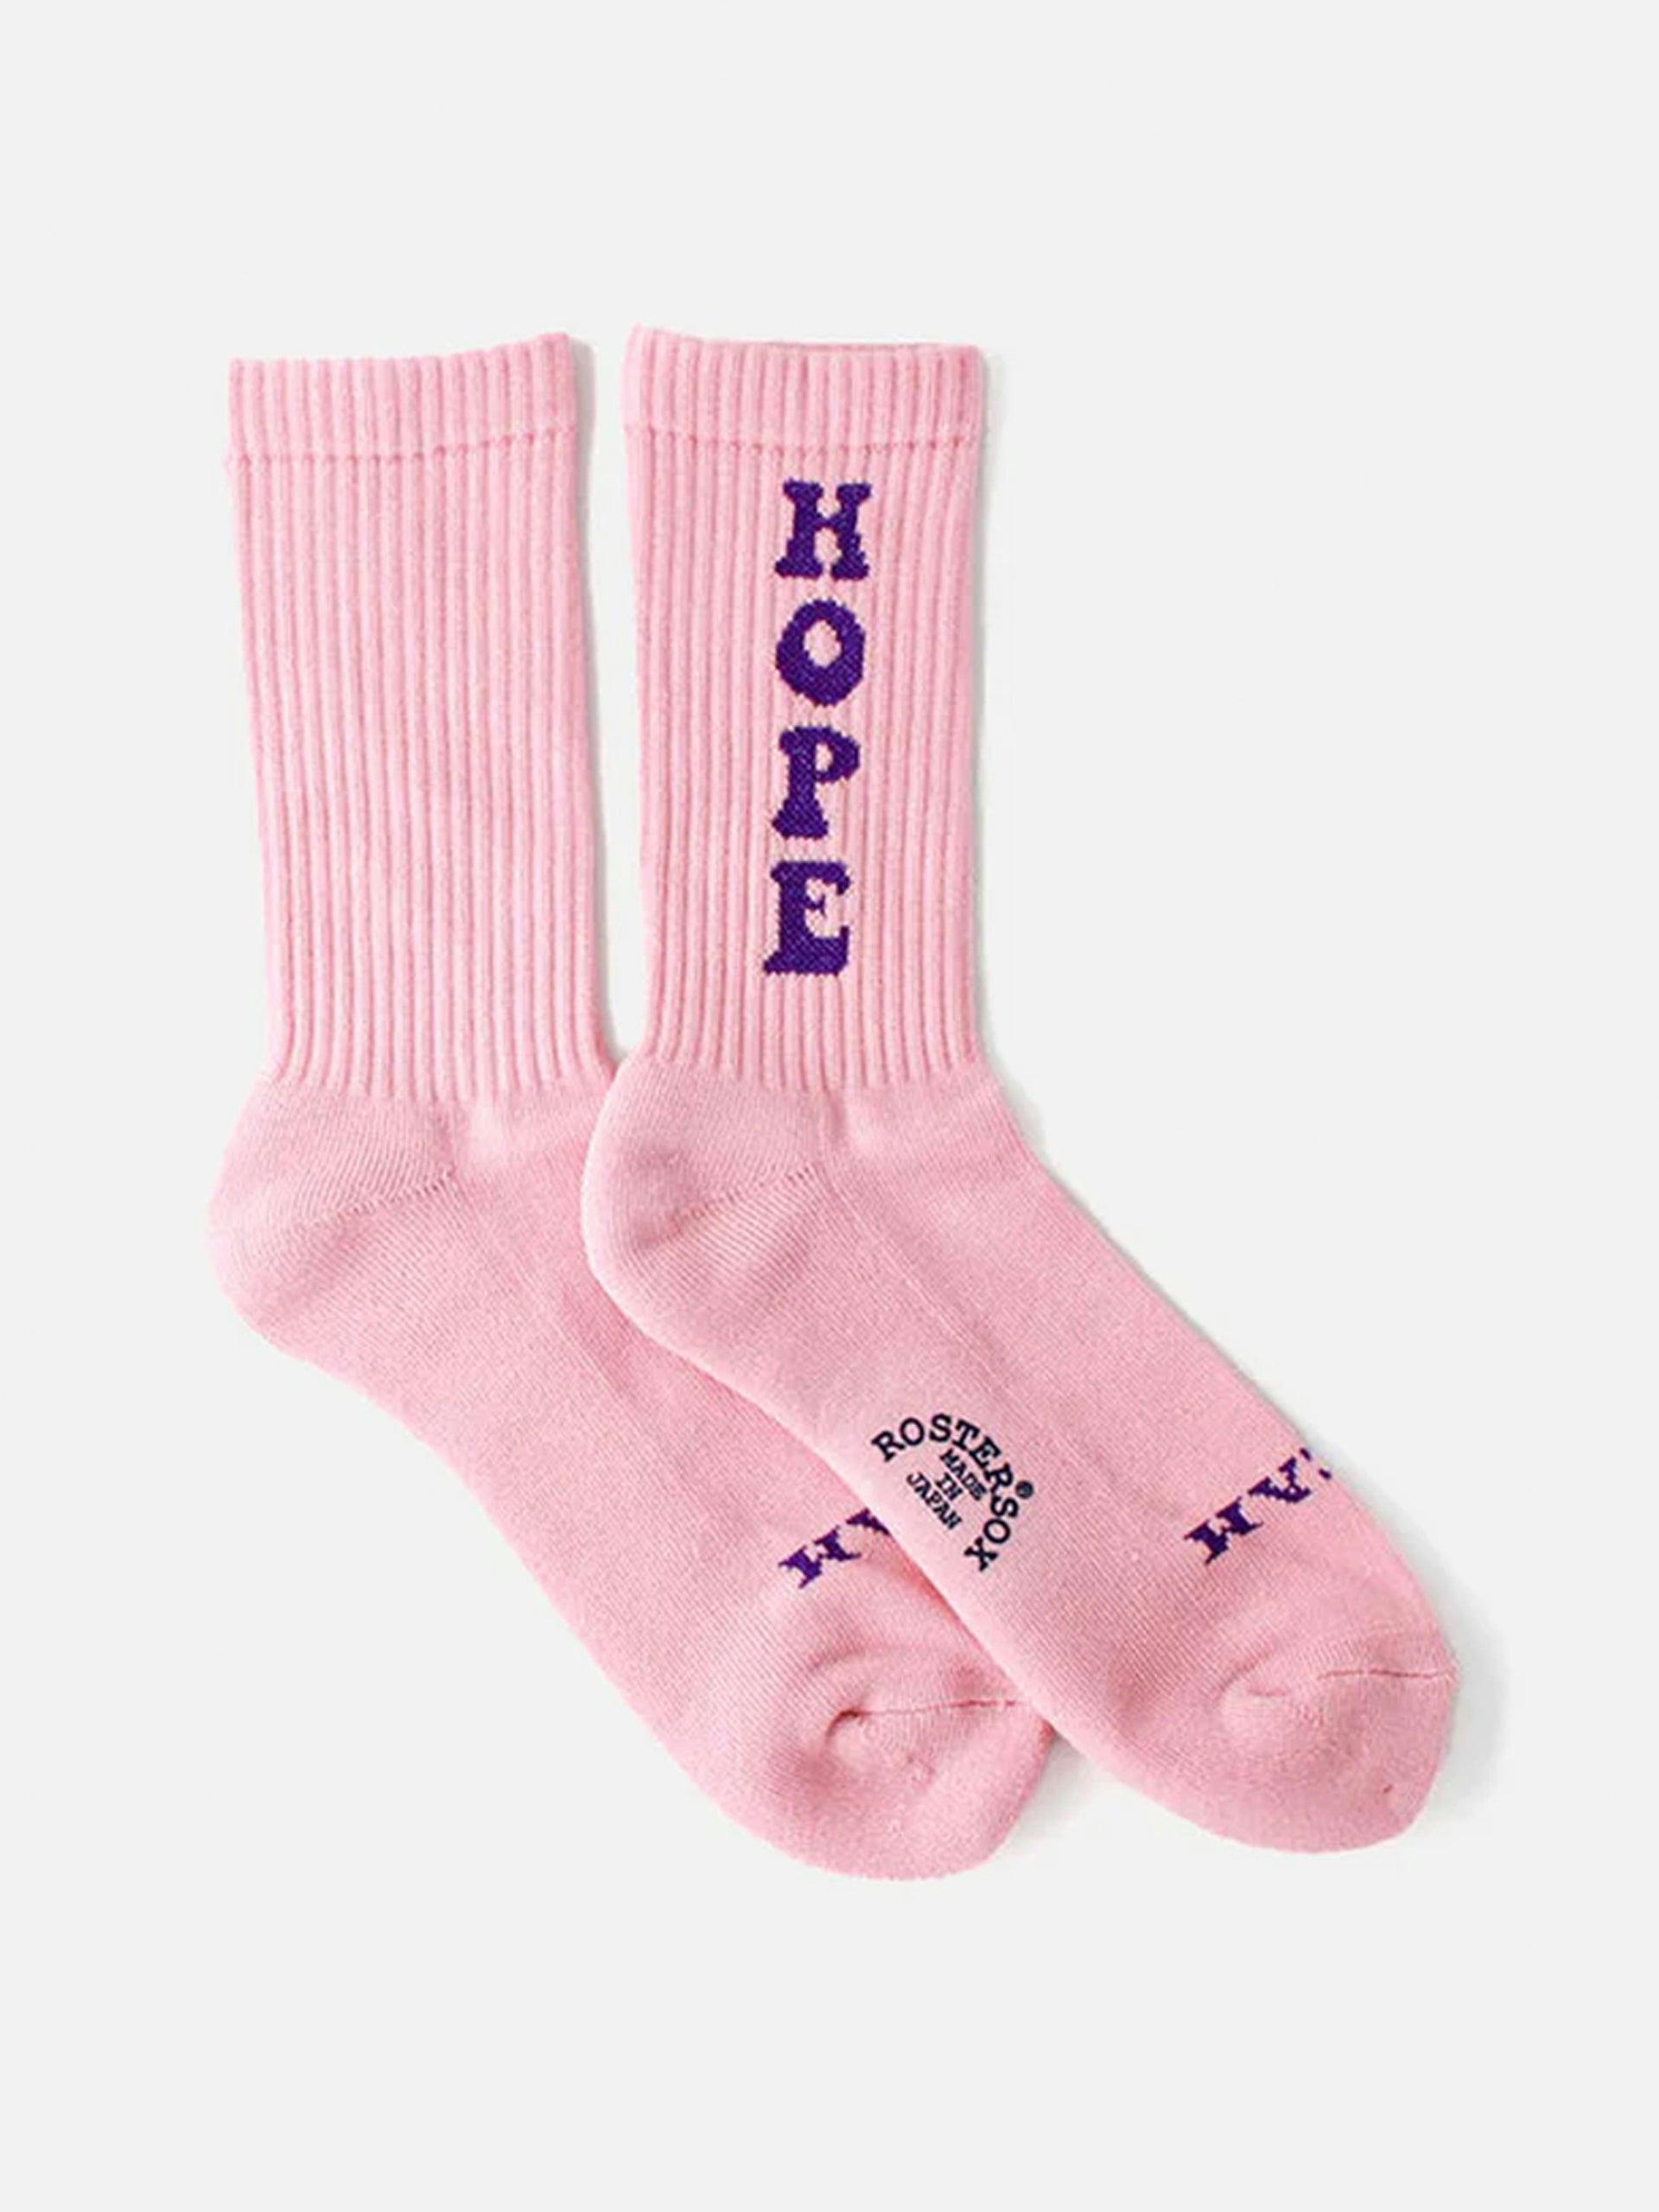 Hope socks